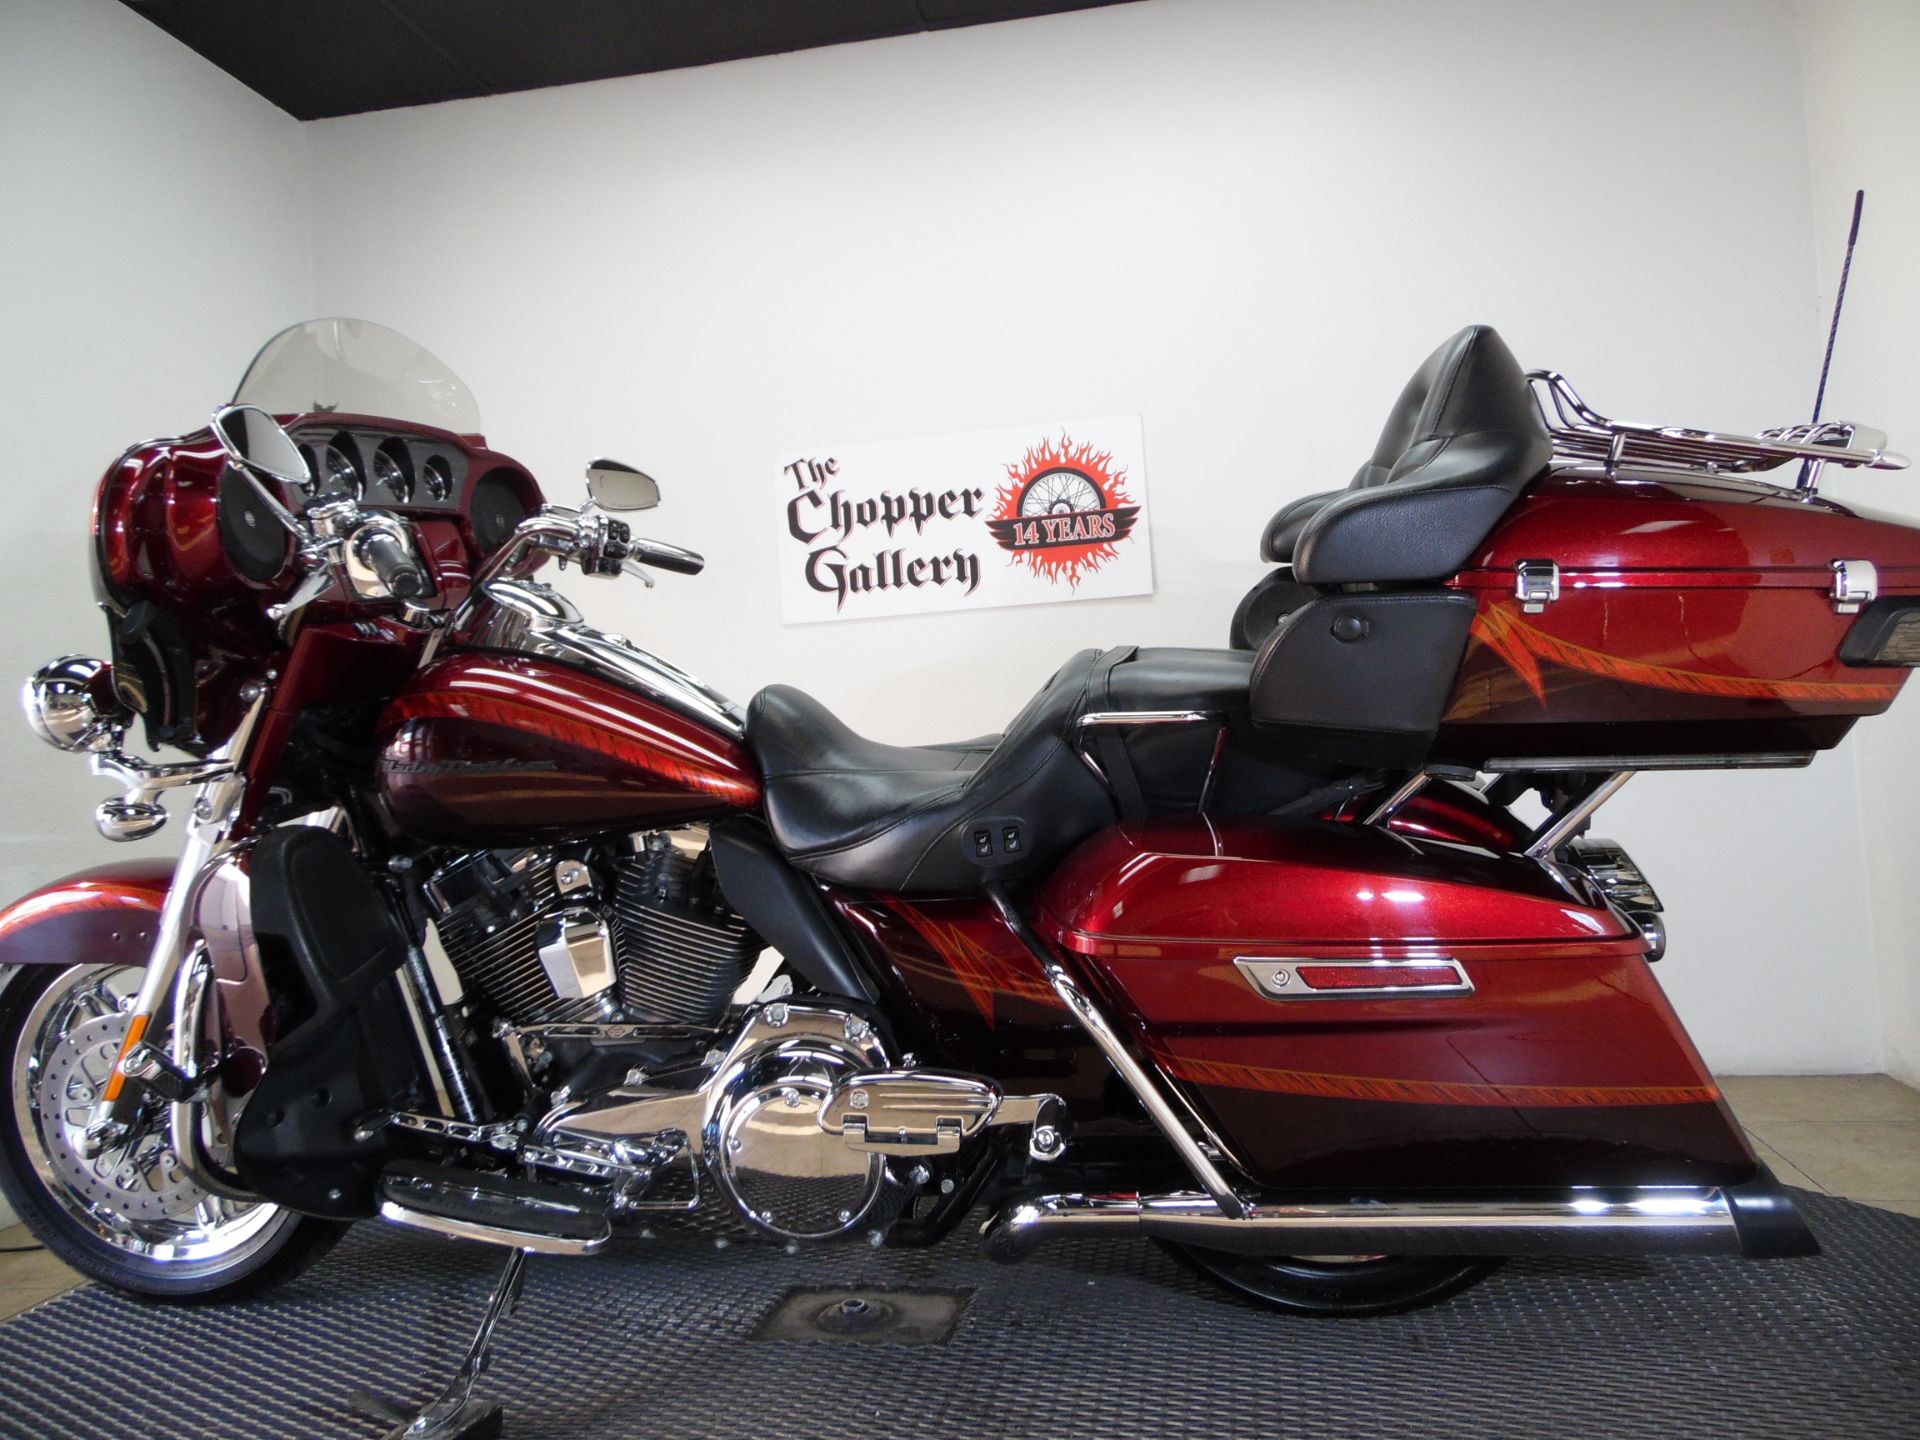 2014 Harley-Davidson CVO™ Limited in Temecula, California - Photo 6